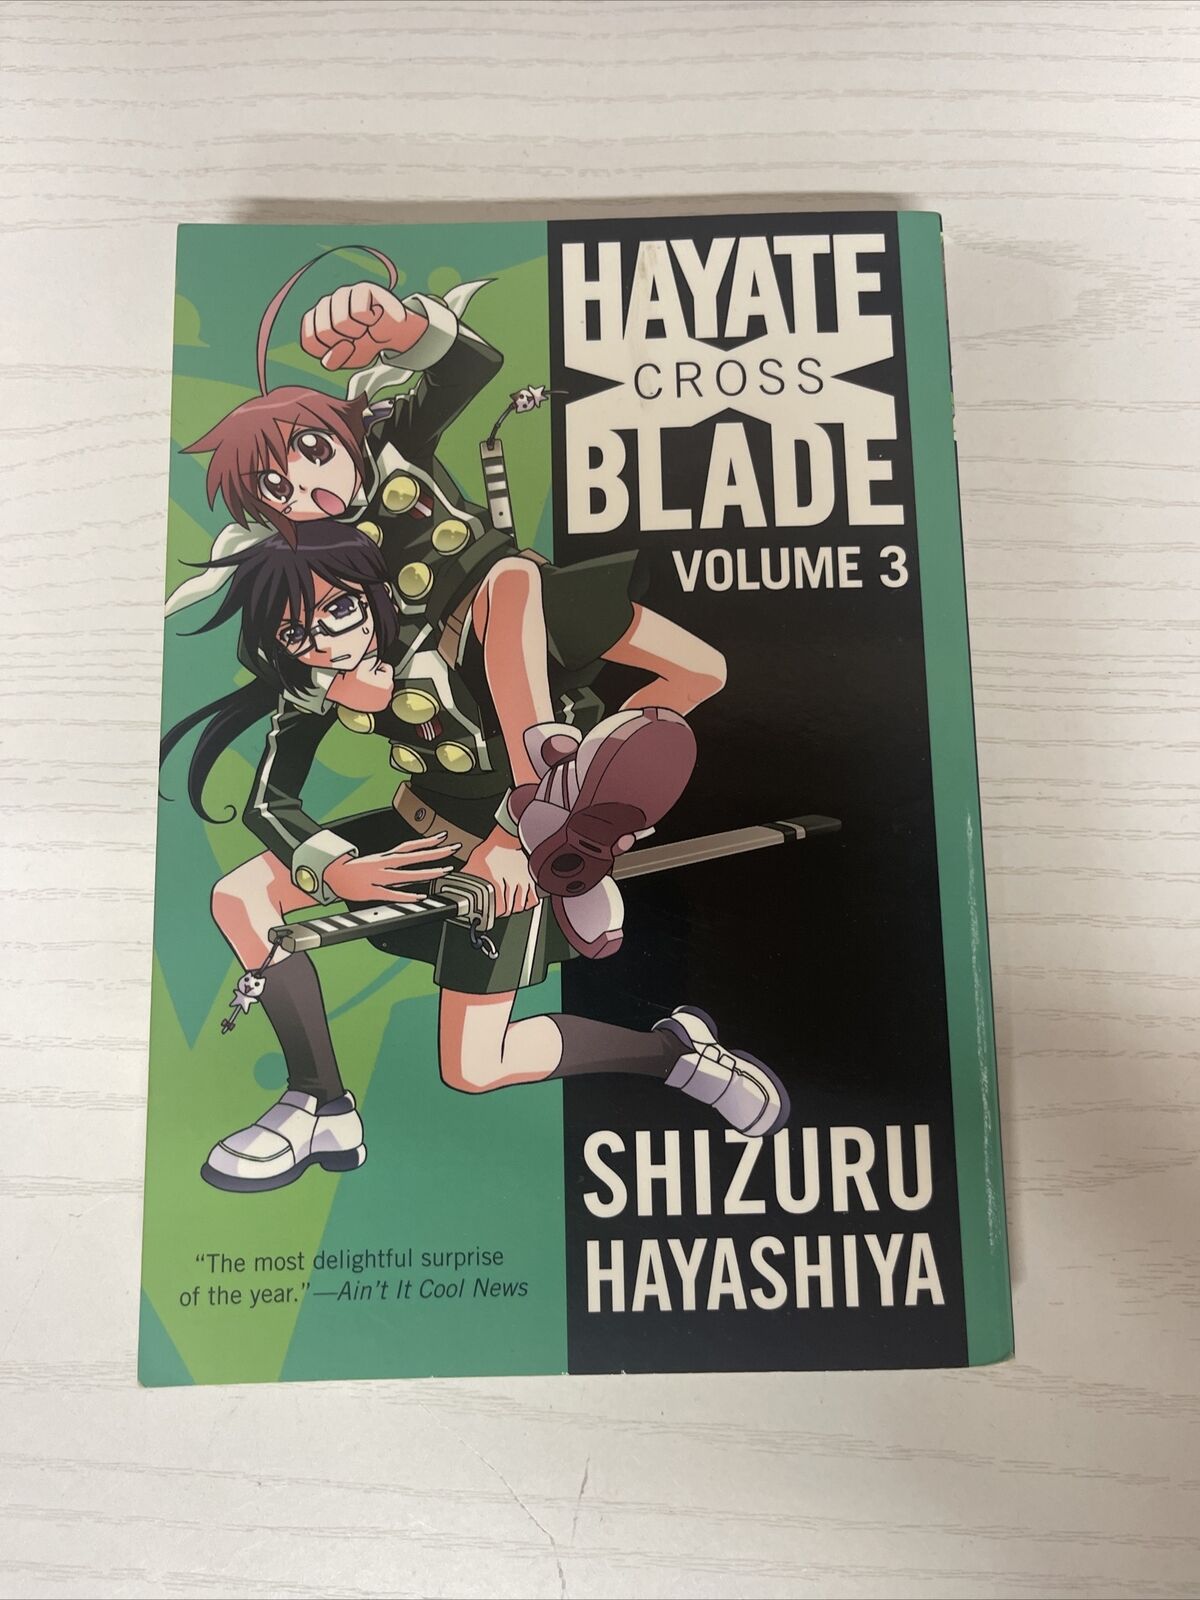 HAYATE X BLADE VOL 3 By Shizuru Hayashiya